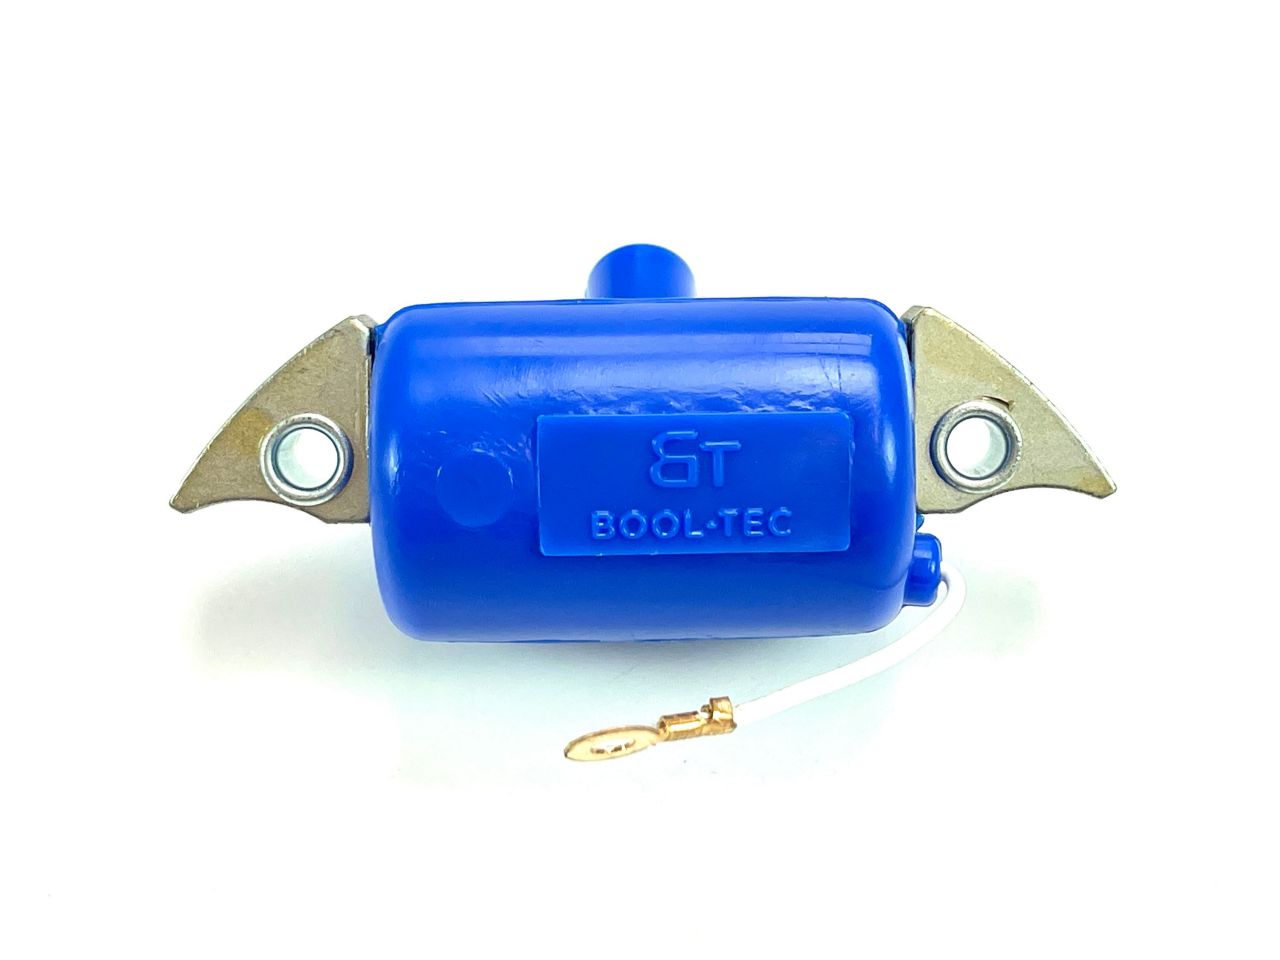 1A Qualitäts Zündspule blau für Bosch und Ducati Zündung 54mm BOOL-Tec von BOOL-tec